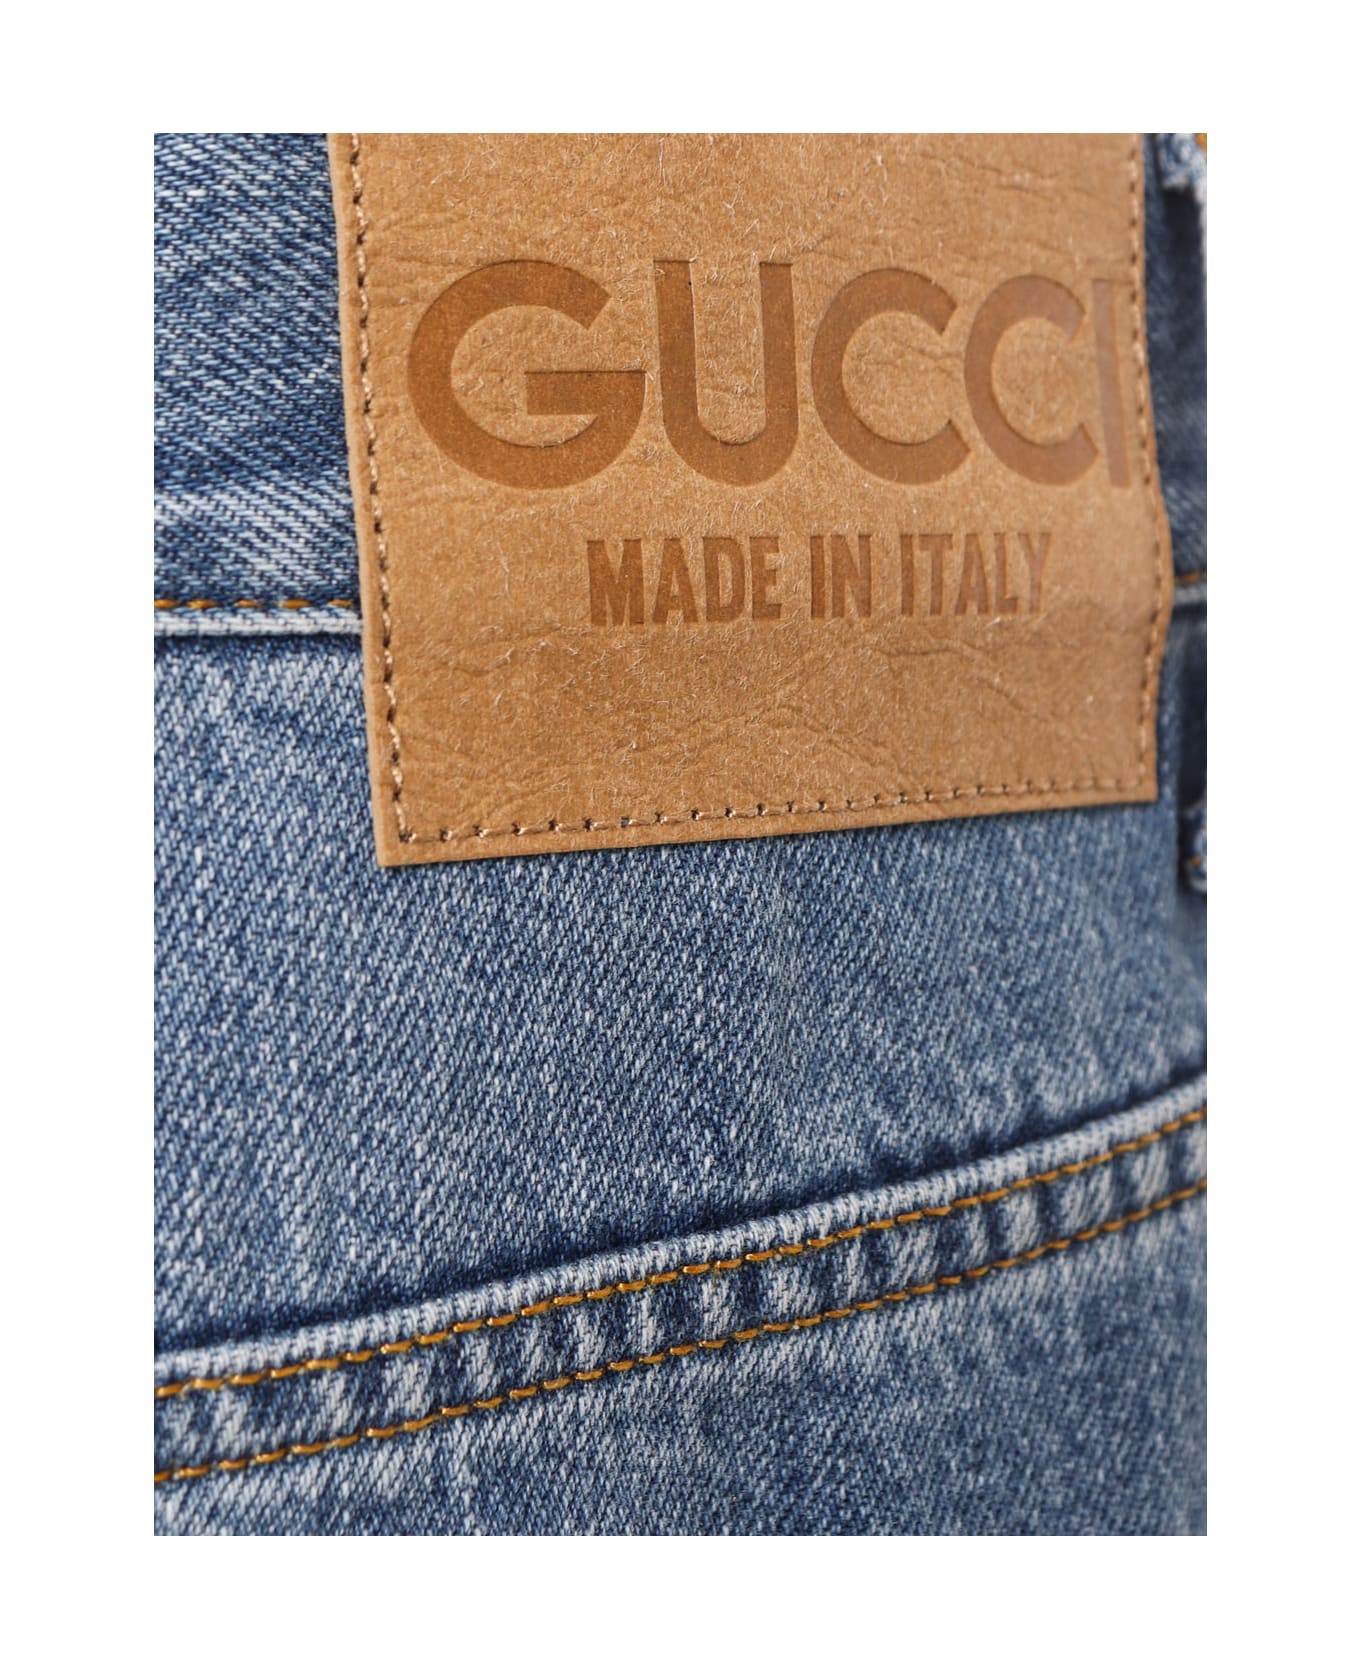 Gucci Jeans